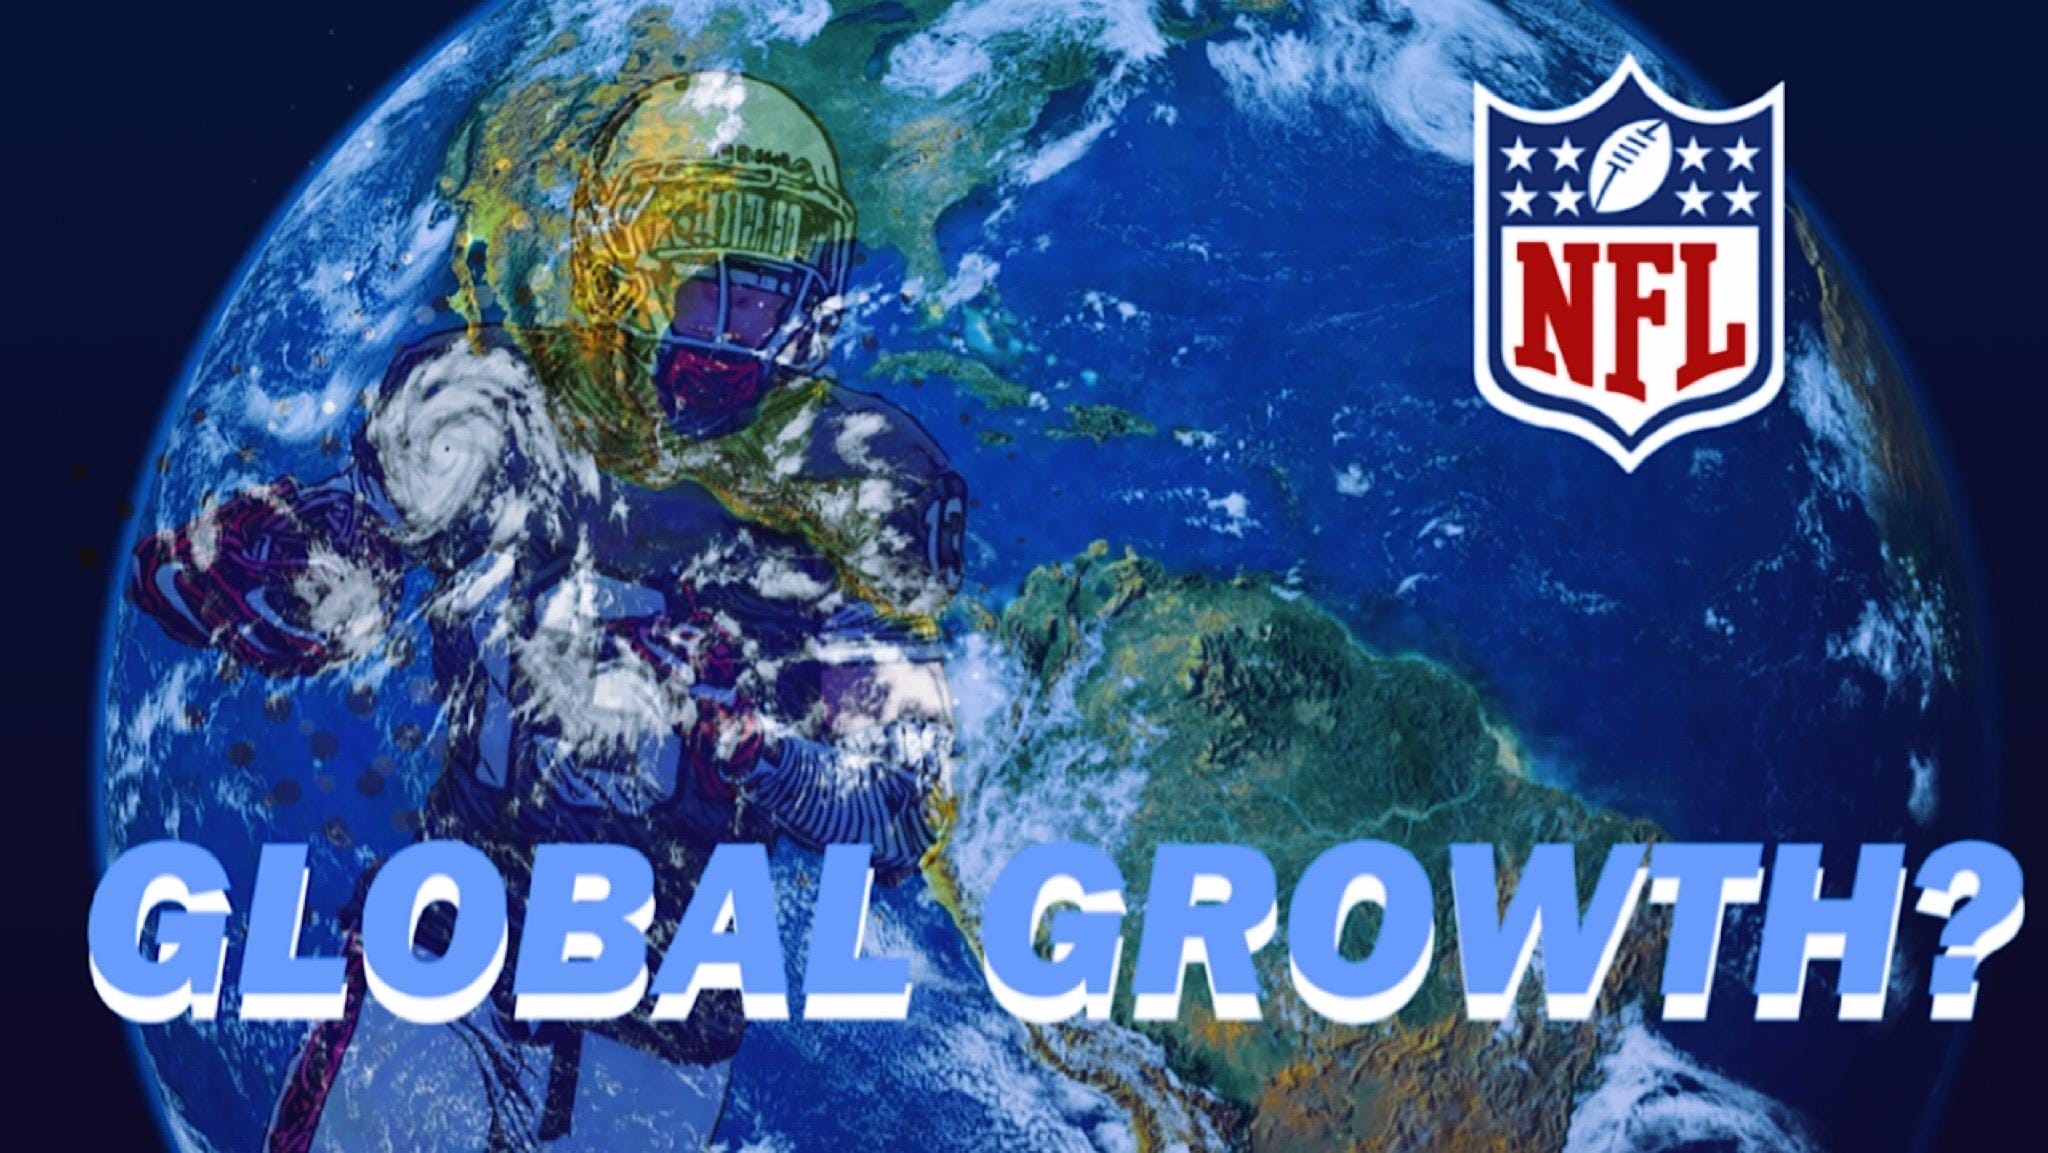 NFL growth